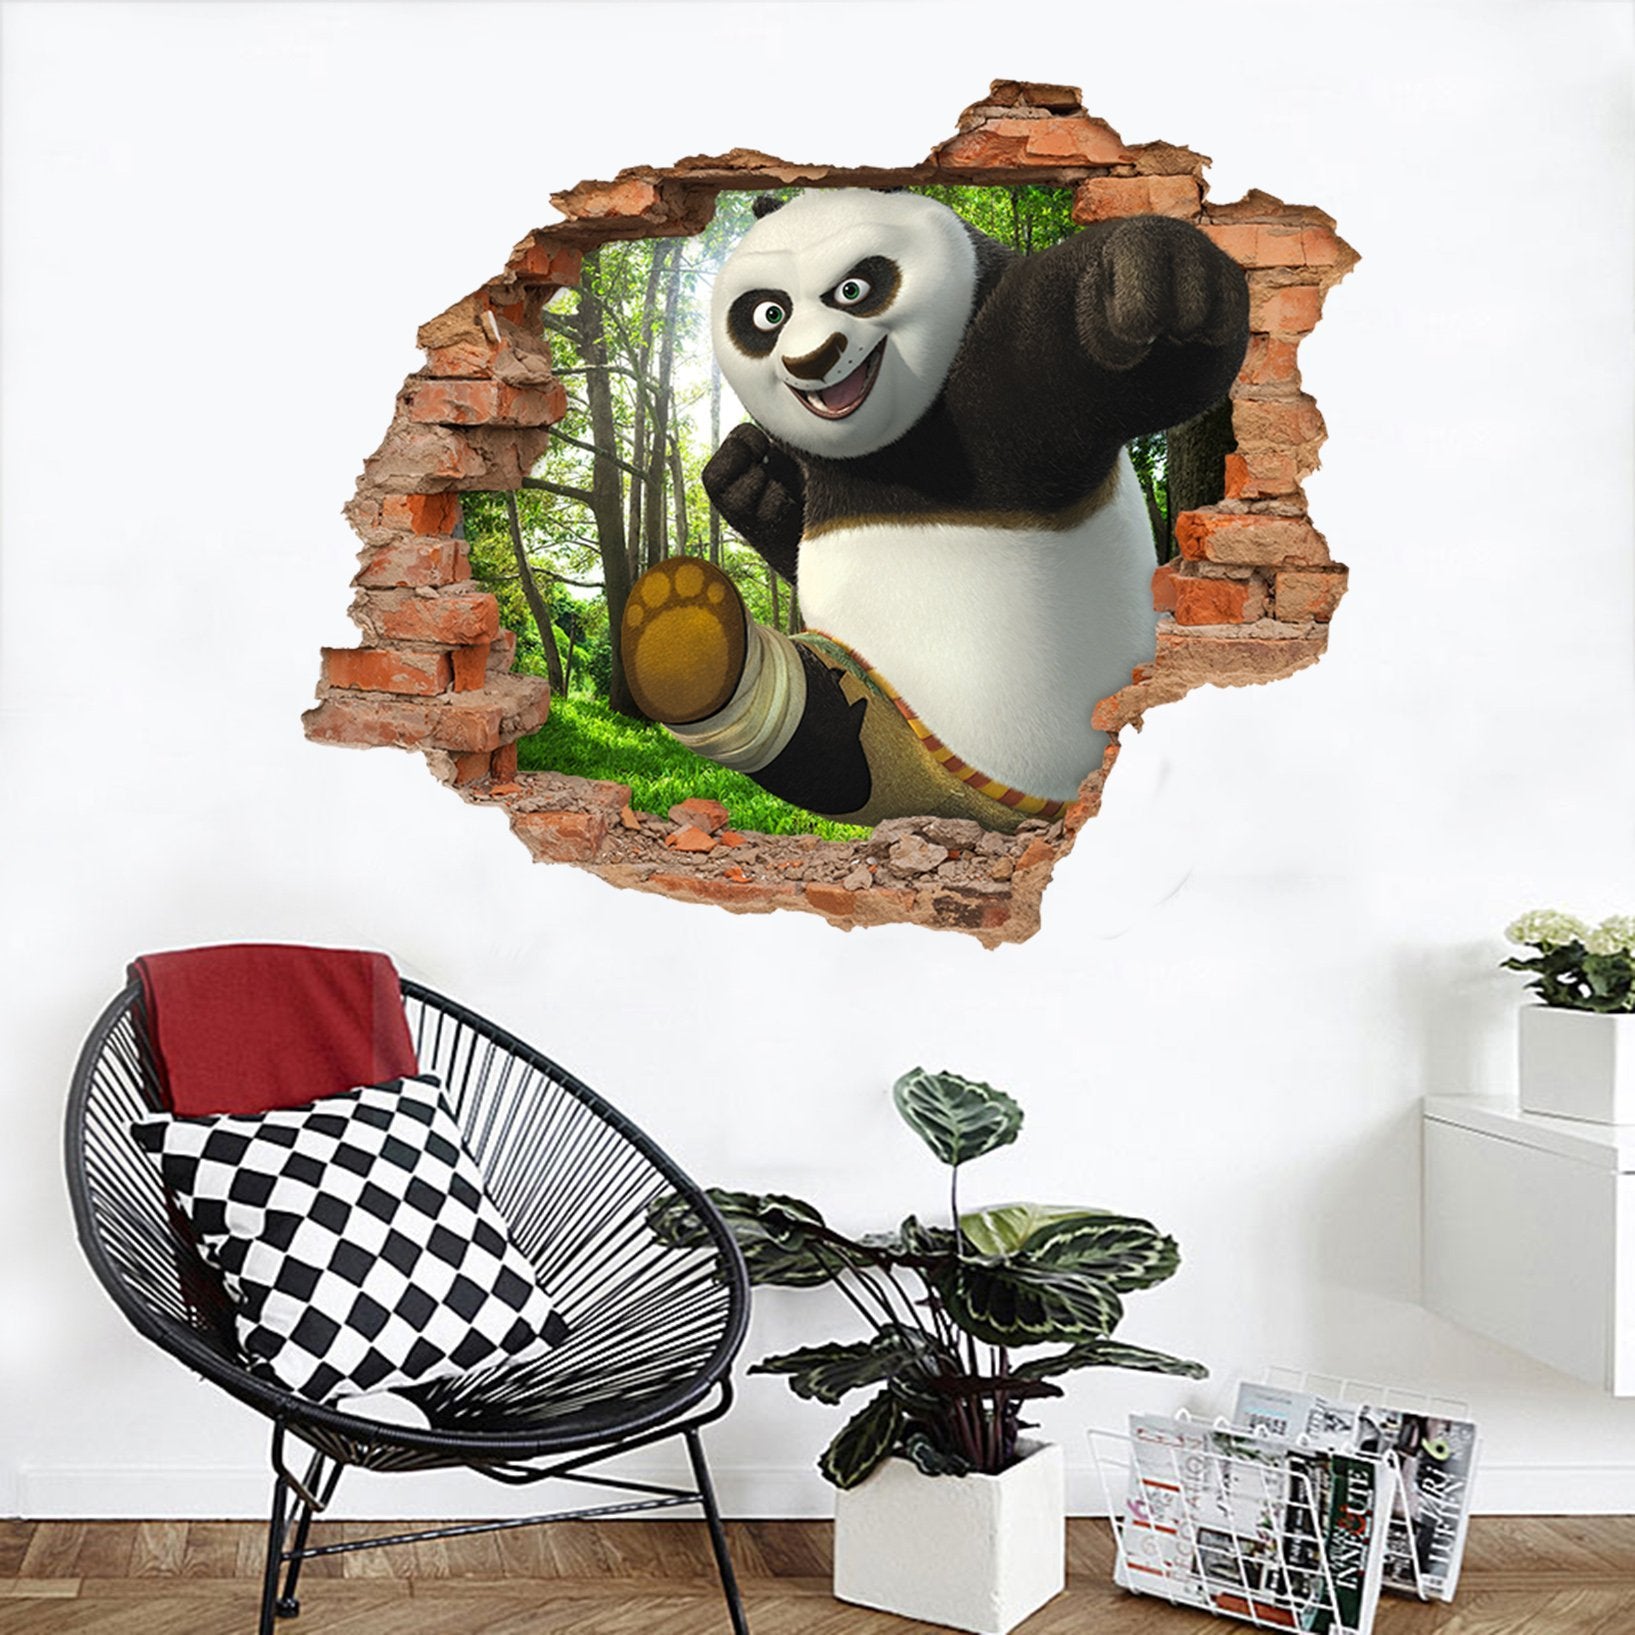 3D Kung Fu Panda 230 Broken Wall Murals Wallpaper AJ Wallpaper 